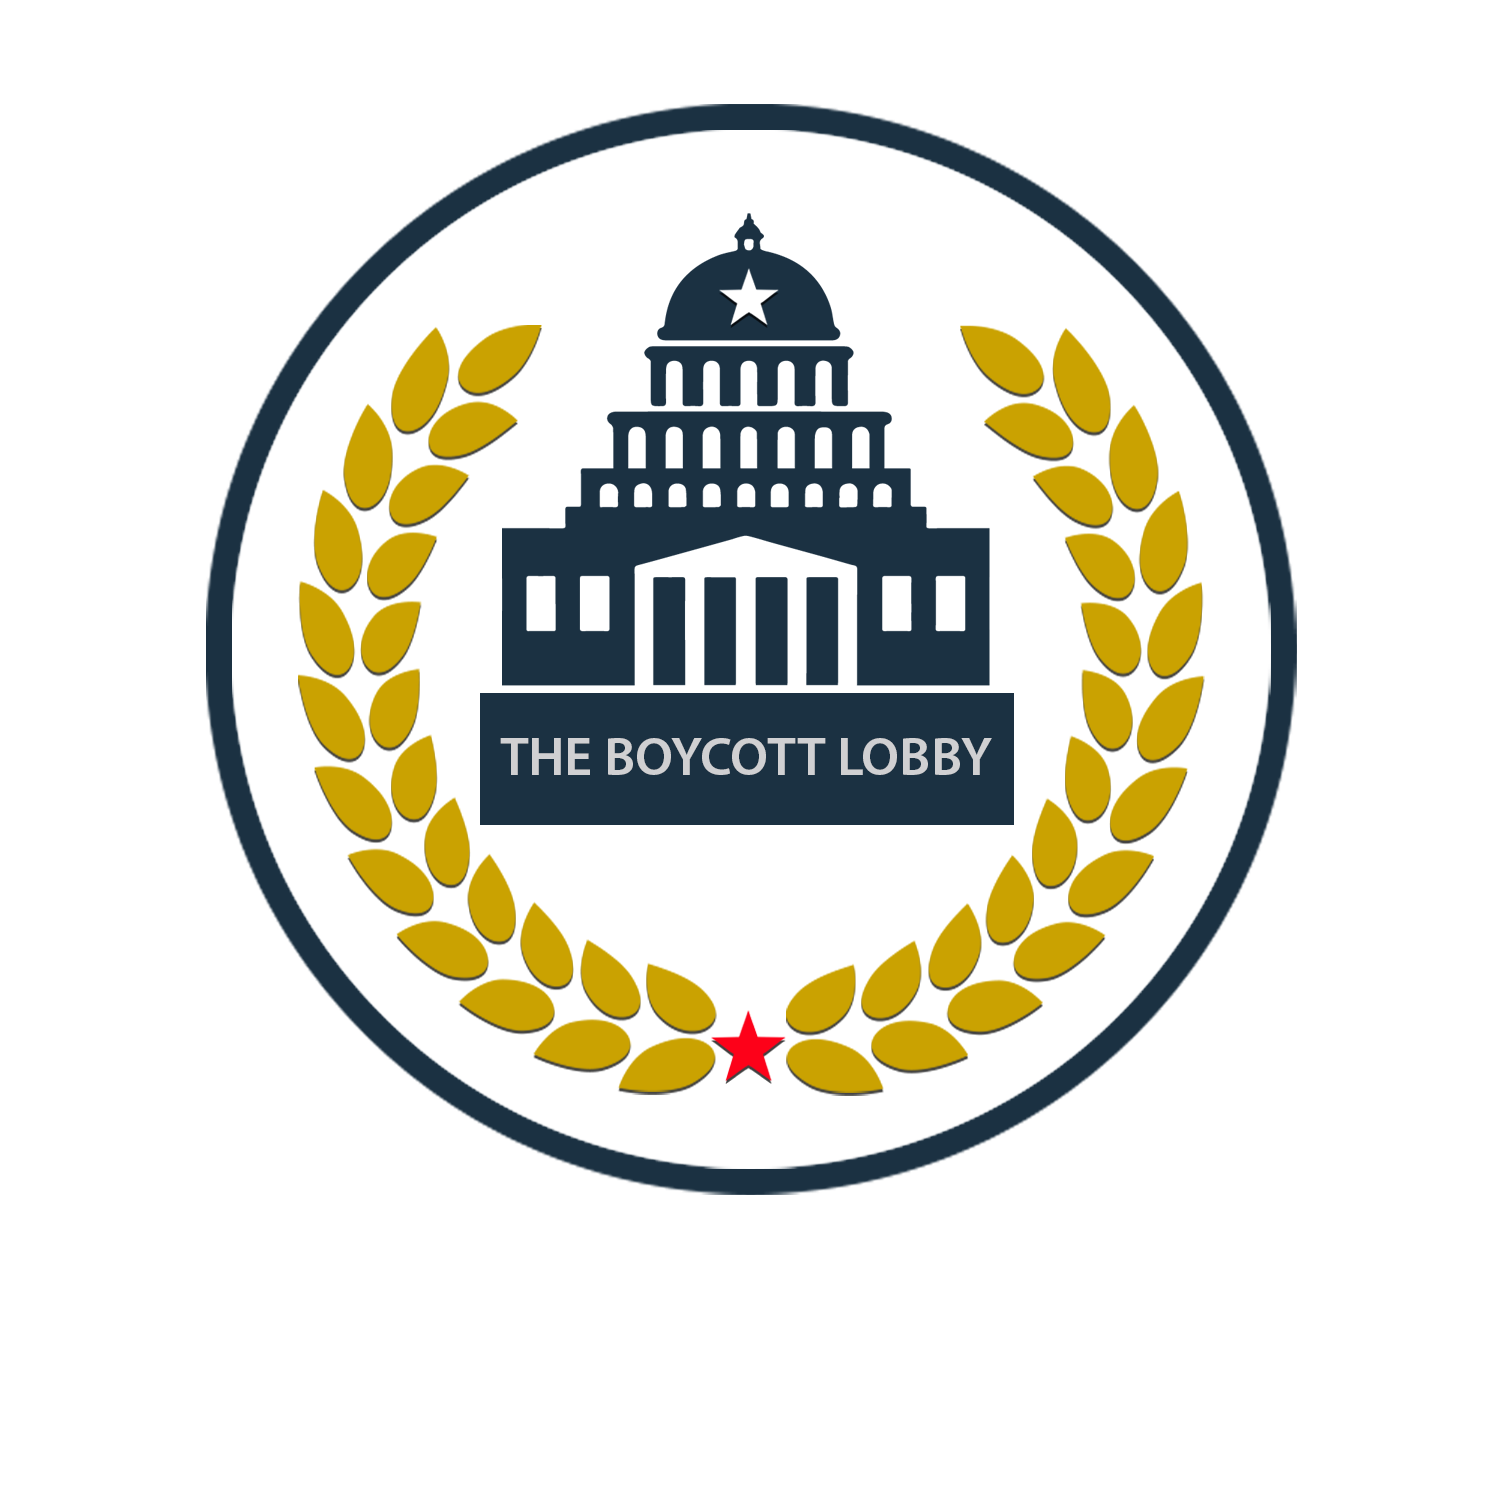 The Boycott Lobby